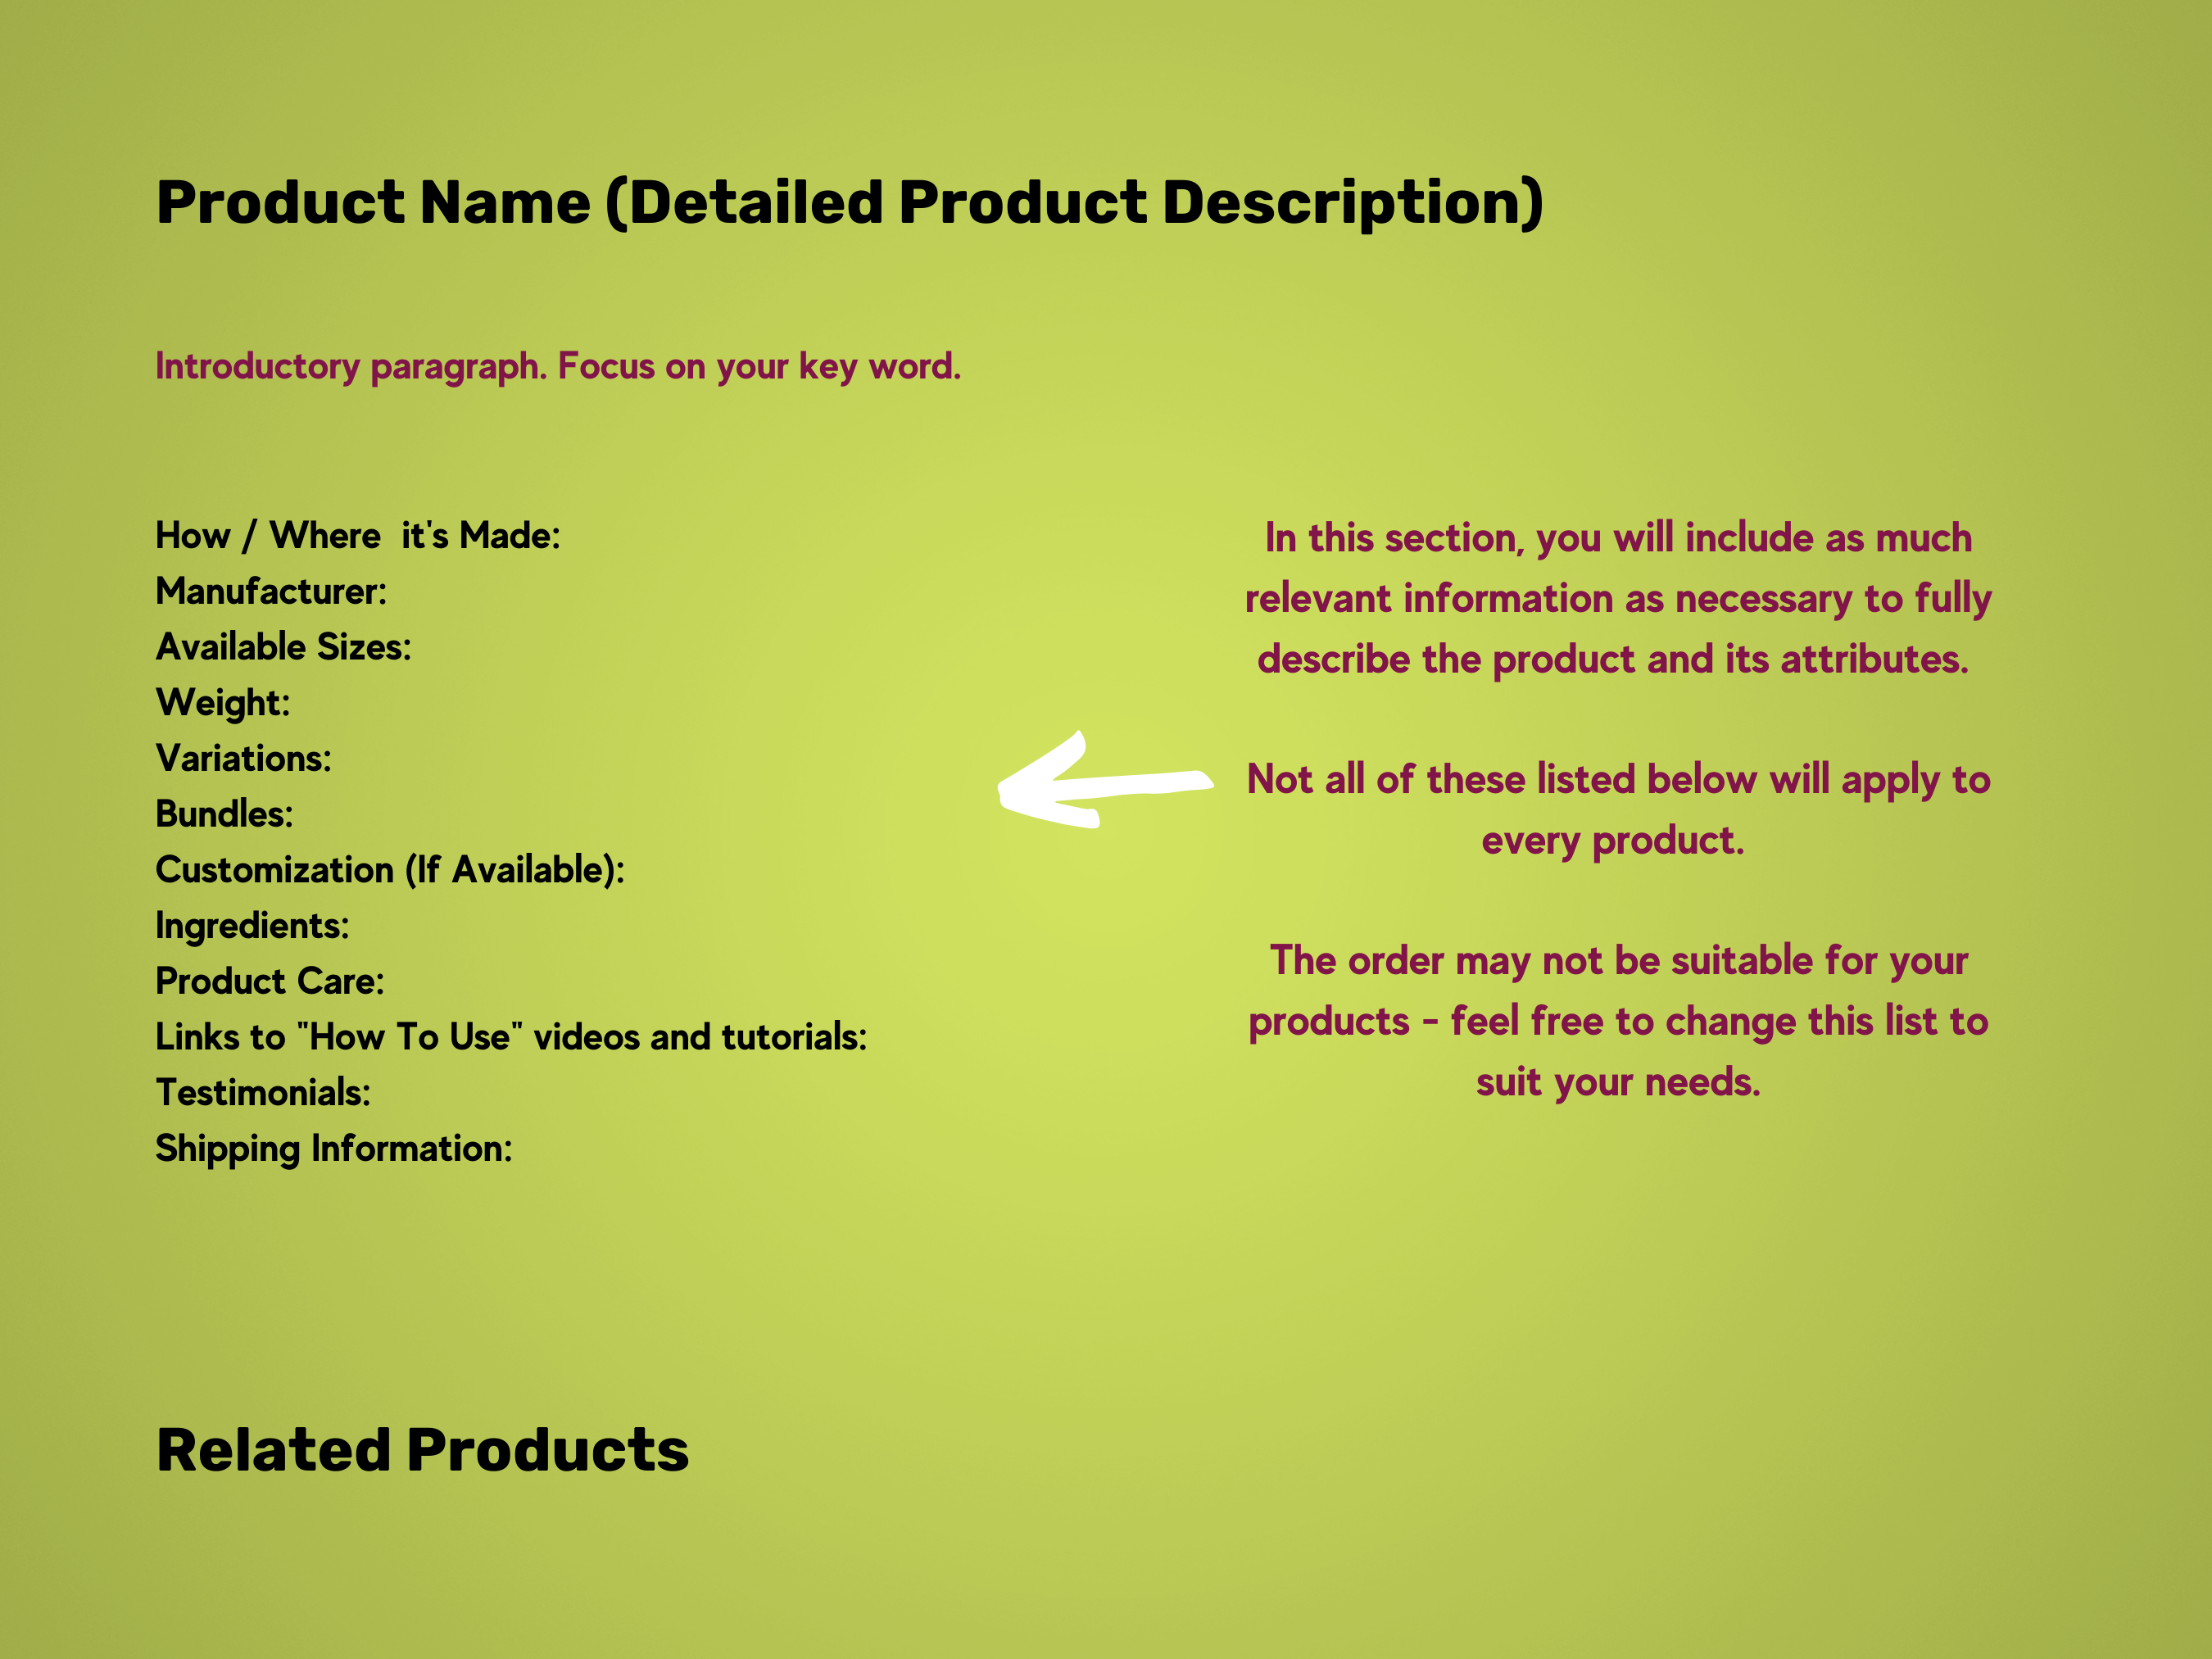 Product Description - Detailed - Below the Fold